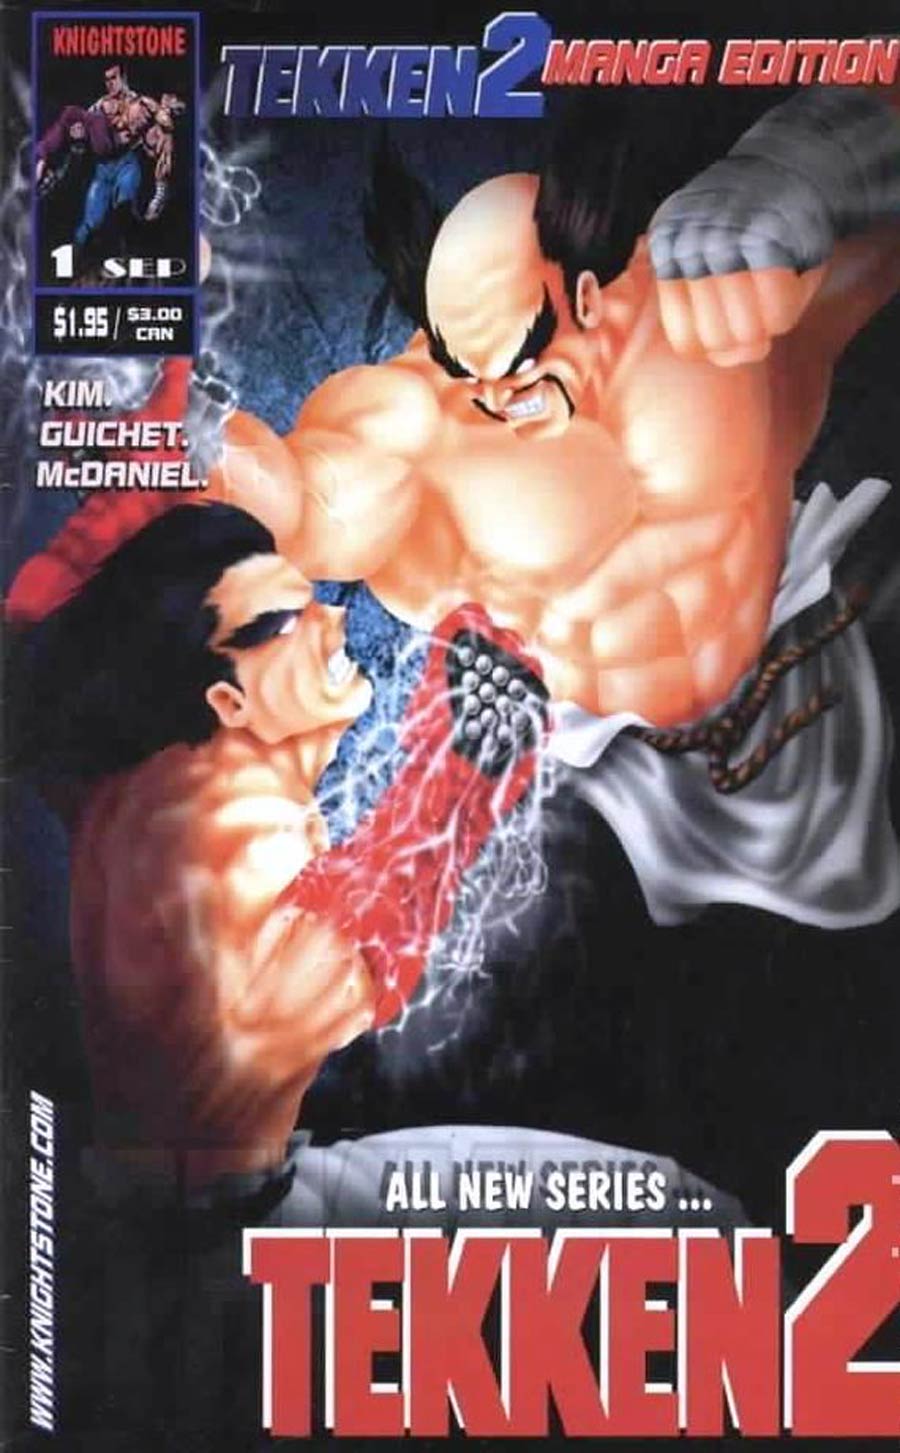 Tekken 2 #1 Cover A Art Cover